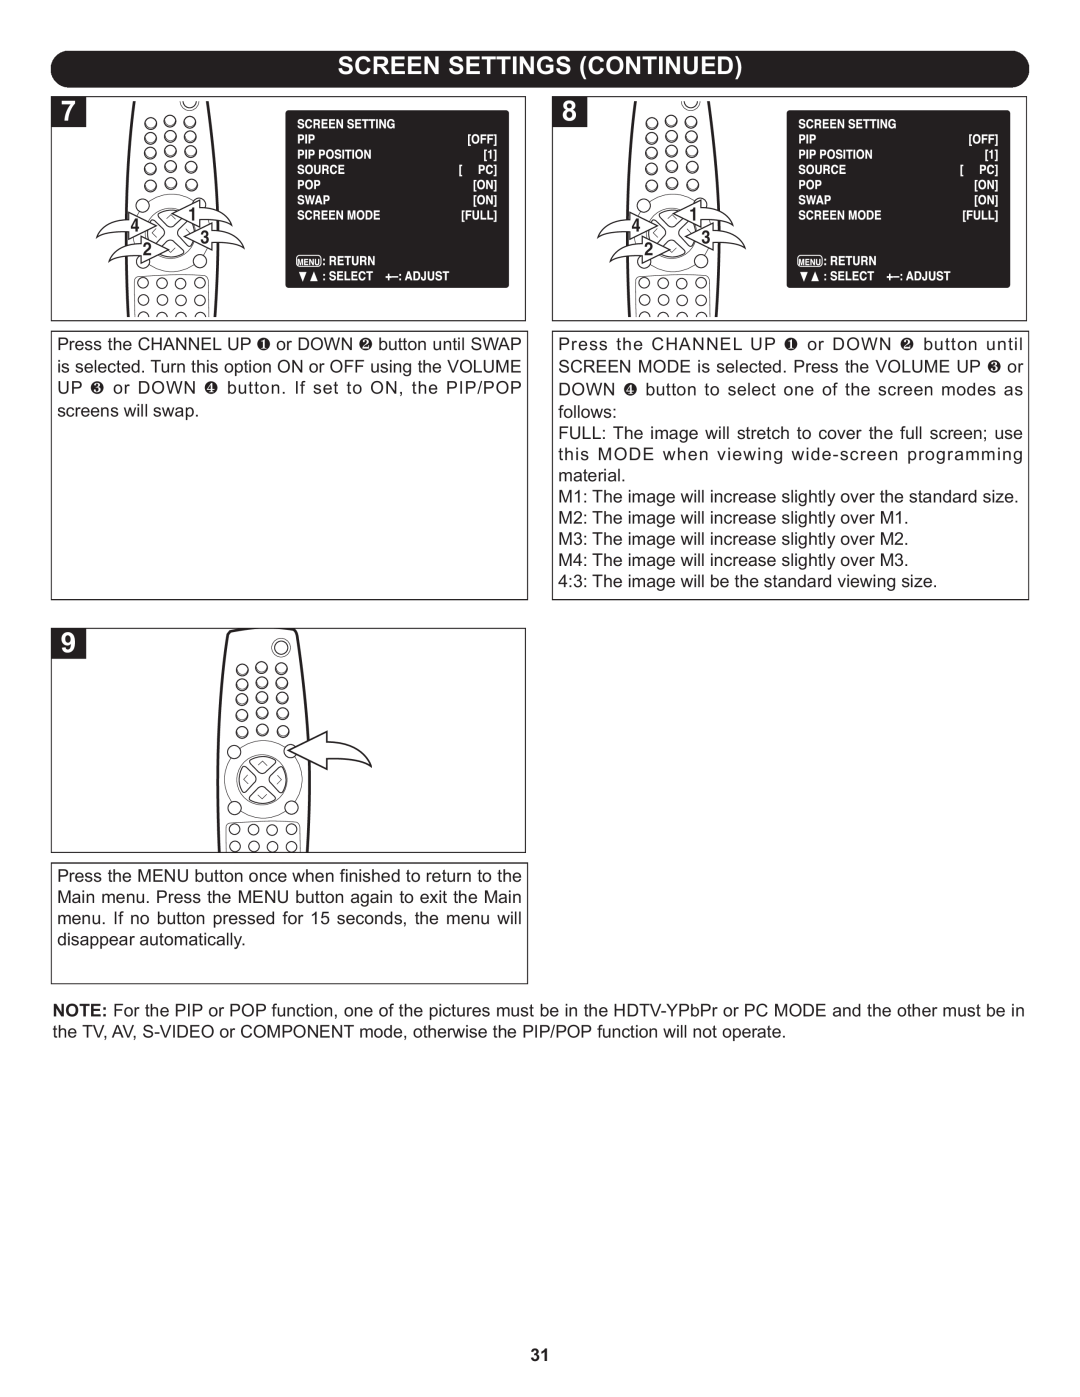 Memorex MT3010OM manual Screen Settings Continued 